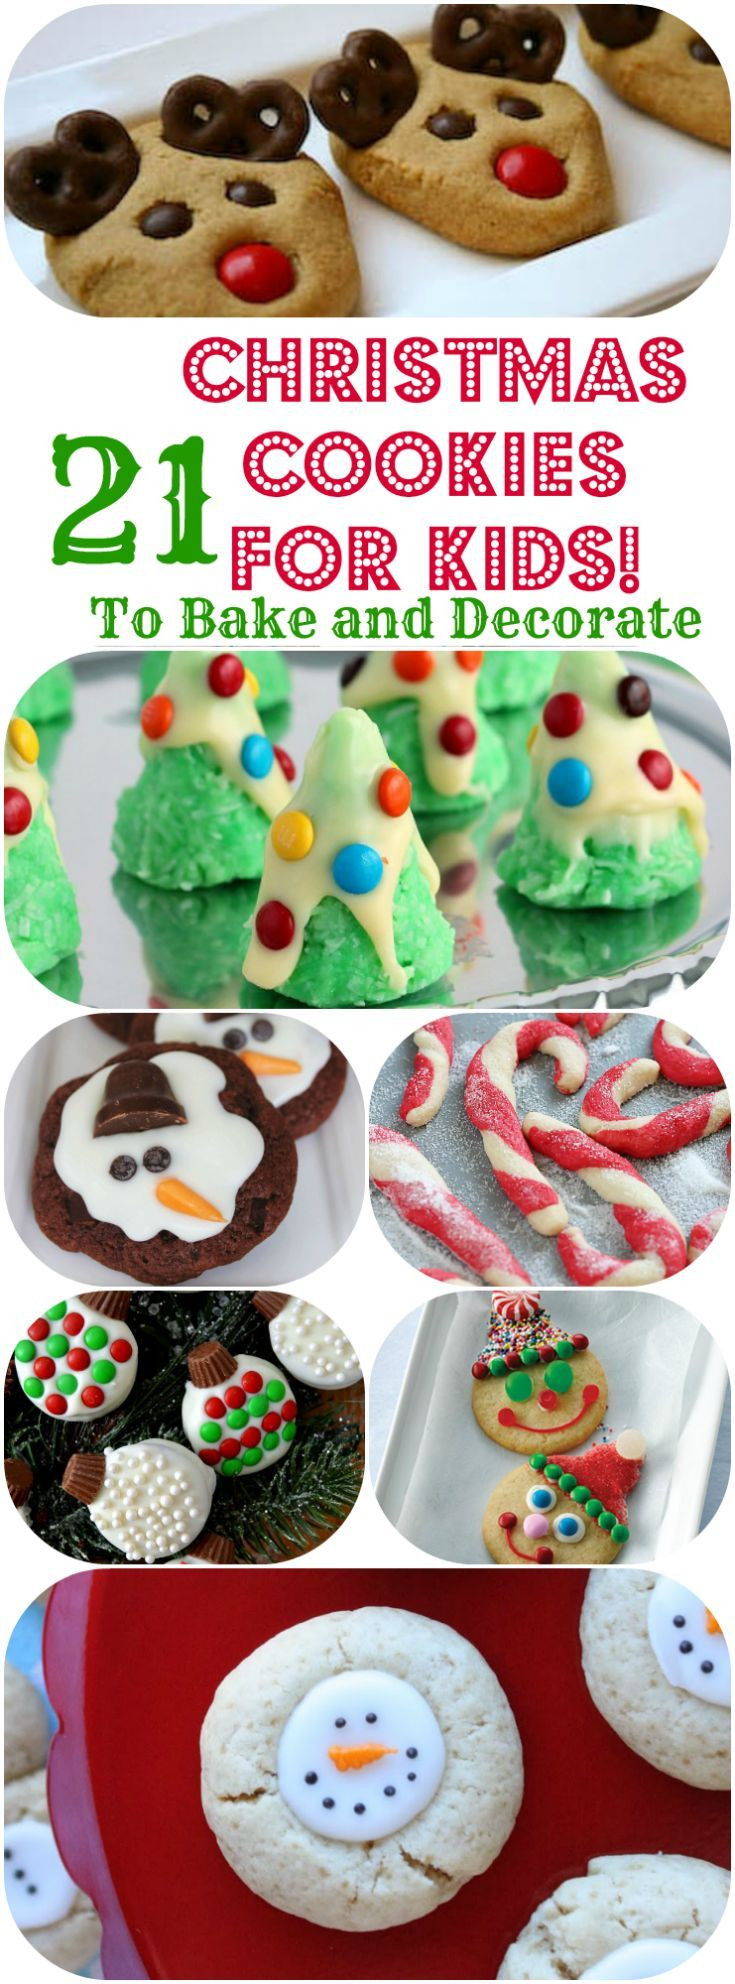 Christmas Treats Recipes For Kids
 21 Christmas Cookies Kids Can Bake